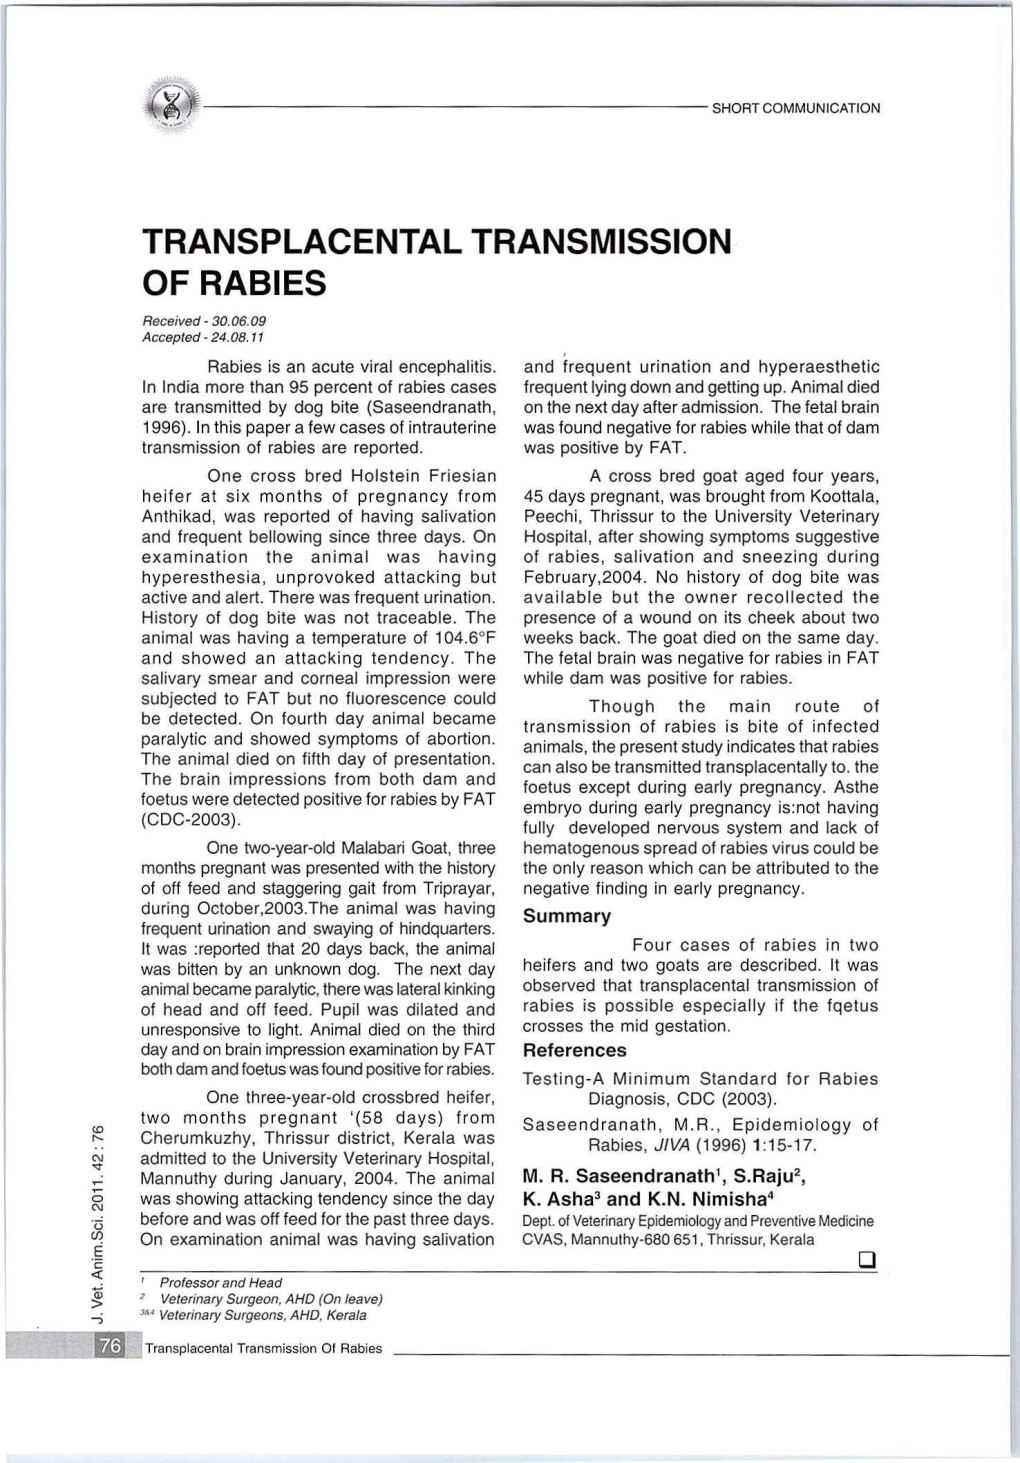 Transplacental Transmission of Rabies